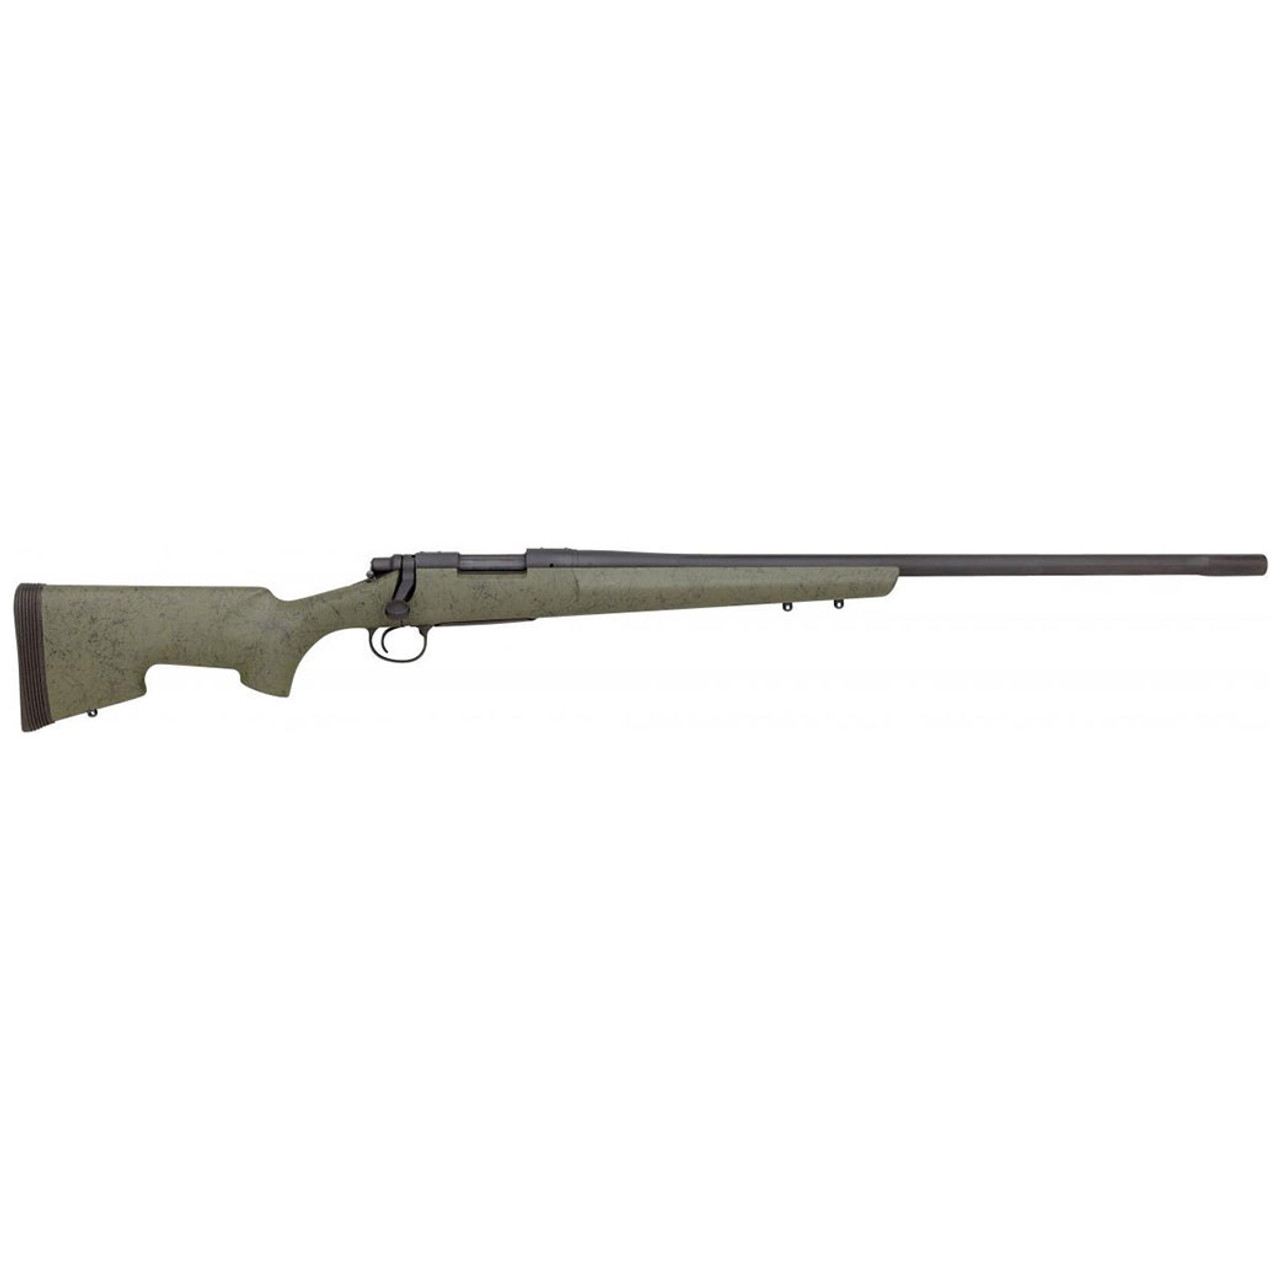 Remington 84462 700 XCR Tactical Long Range Bolt Rifle 300 WIN, RH, 26 in, Black, Fiber Stock, 3+1 Rnd, Adj Trigger, 0540-0707